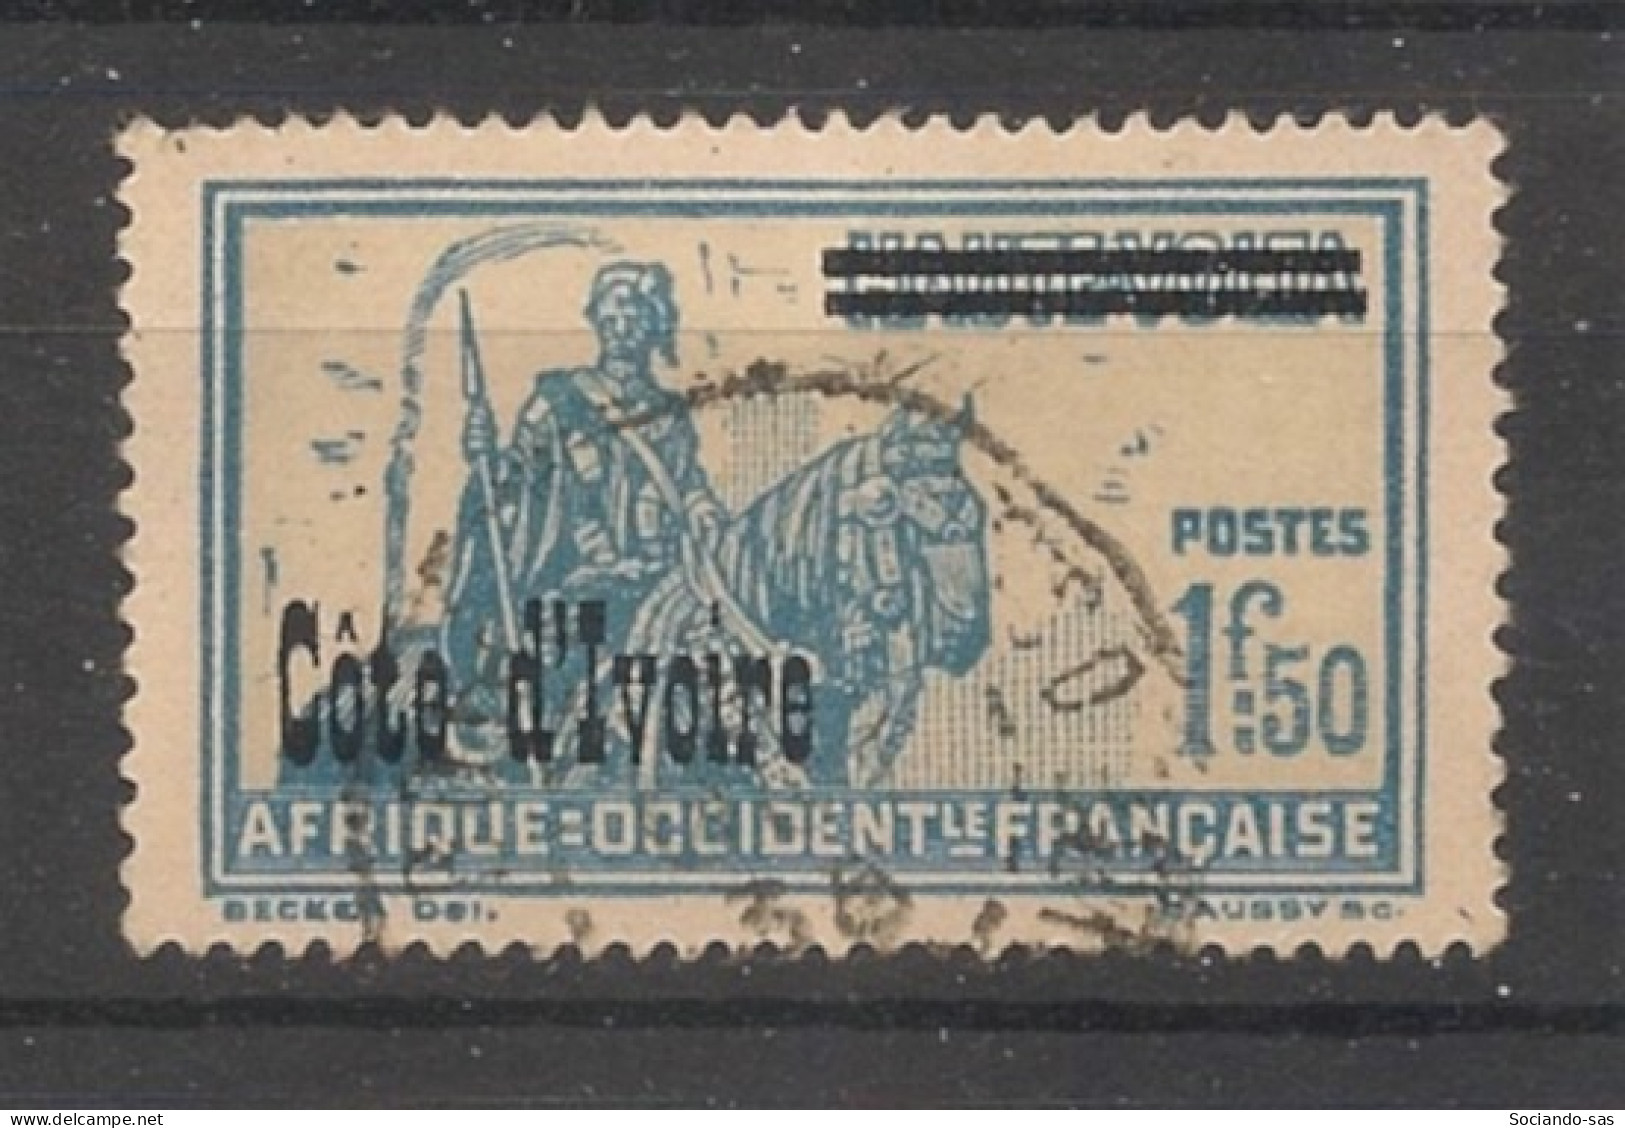 COTE D'IVOIRE - 1933 - N°YT. 101 - 1f50 Bleu-gris - Oblitéré / Used - Used Stamps